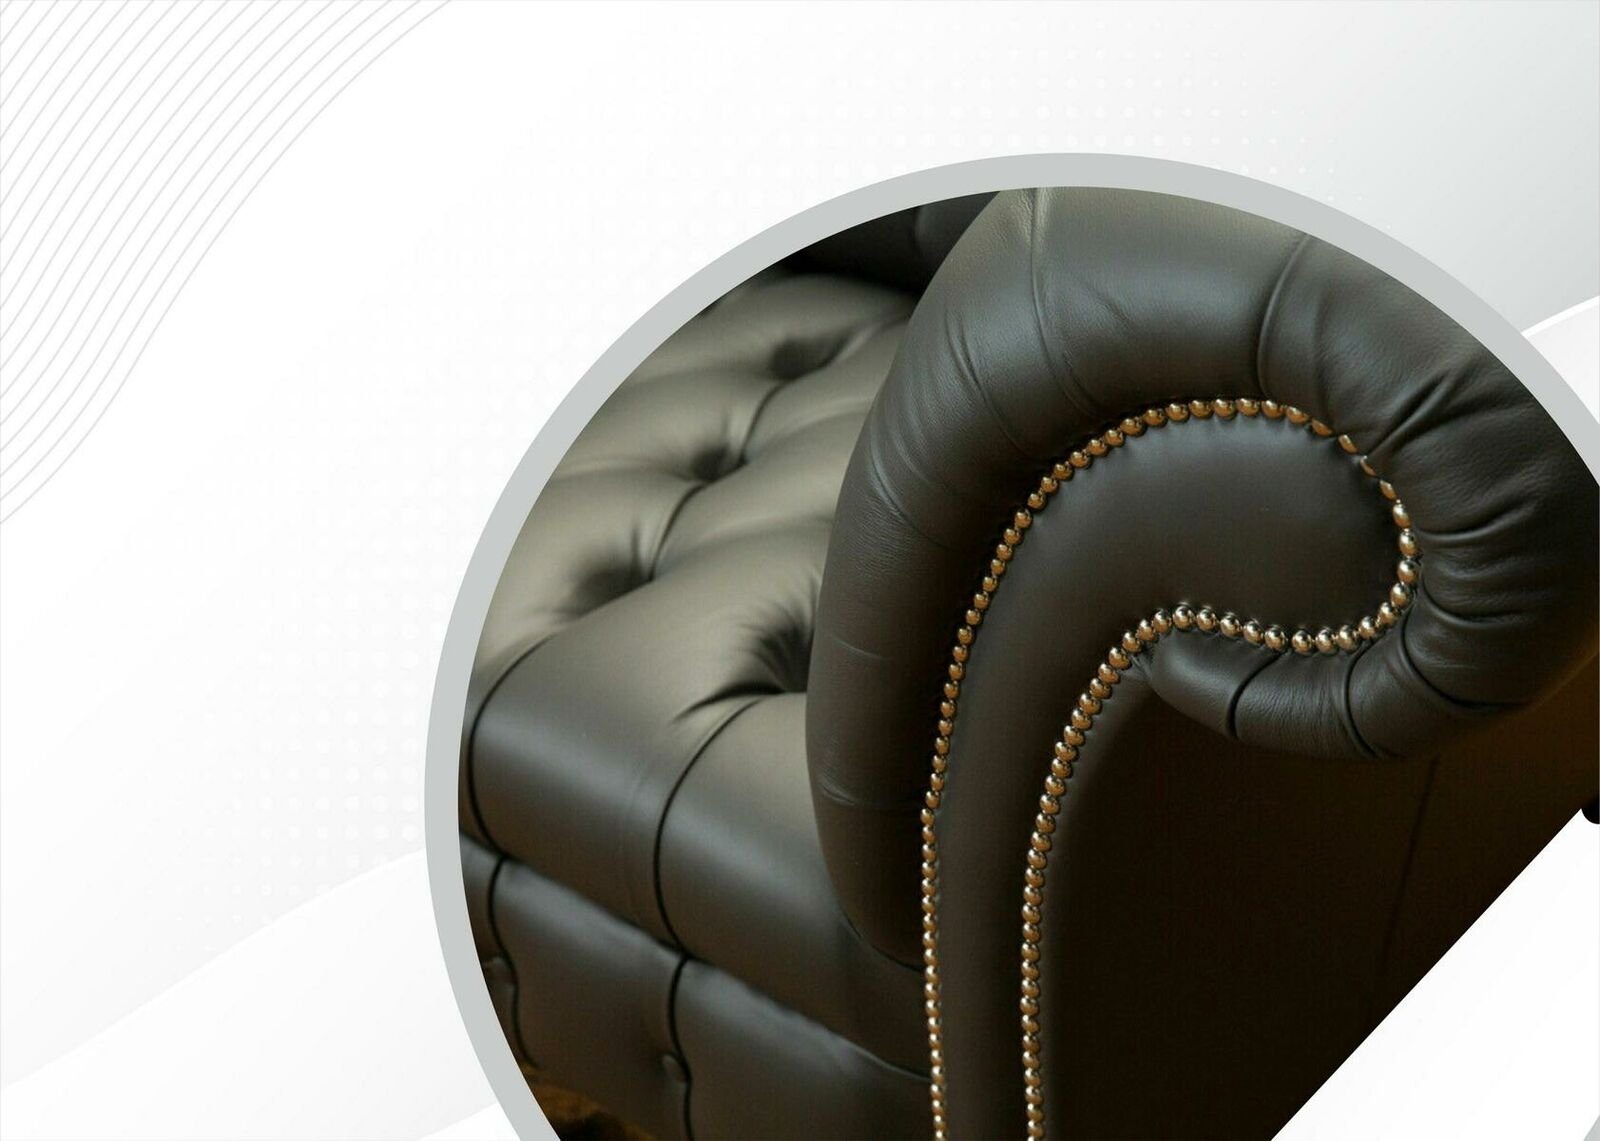 xxl big Chesterfield Design Dunkelgrau Leder Modern Chesterfield-Sofa, Couchen Sitzer Sofa JVmoebel Möbel 4